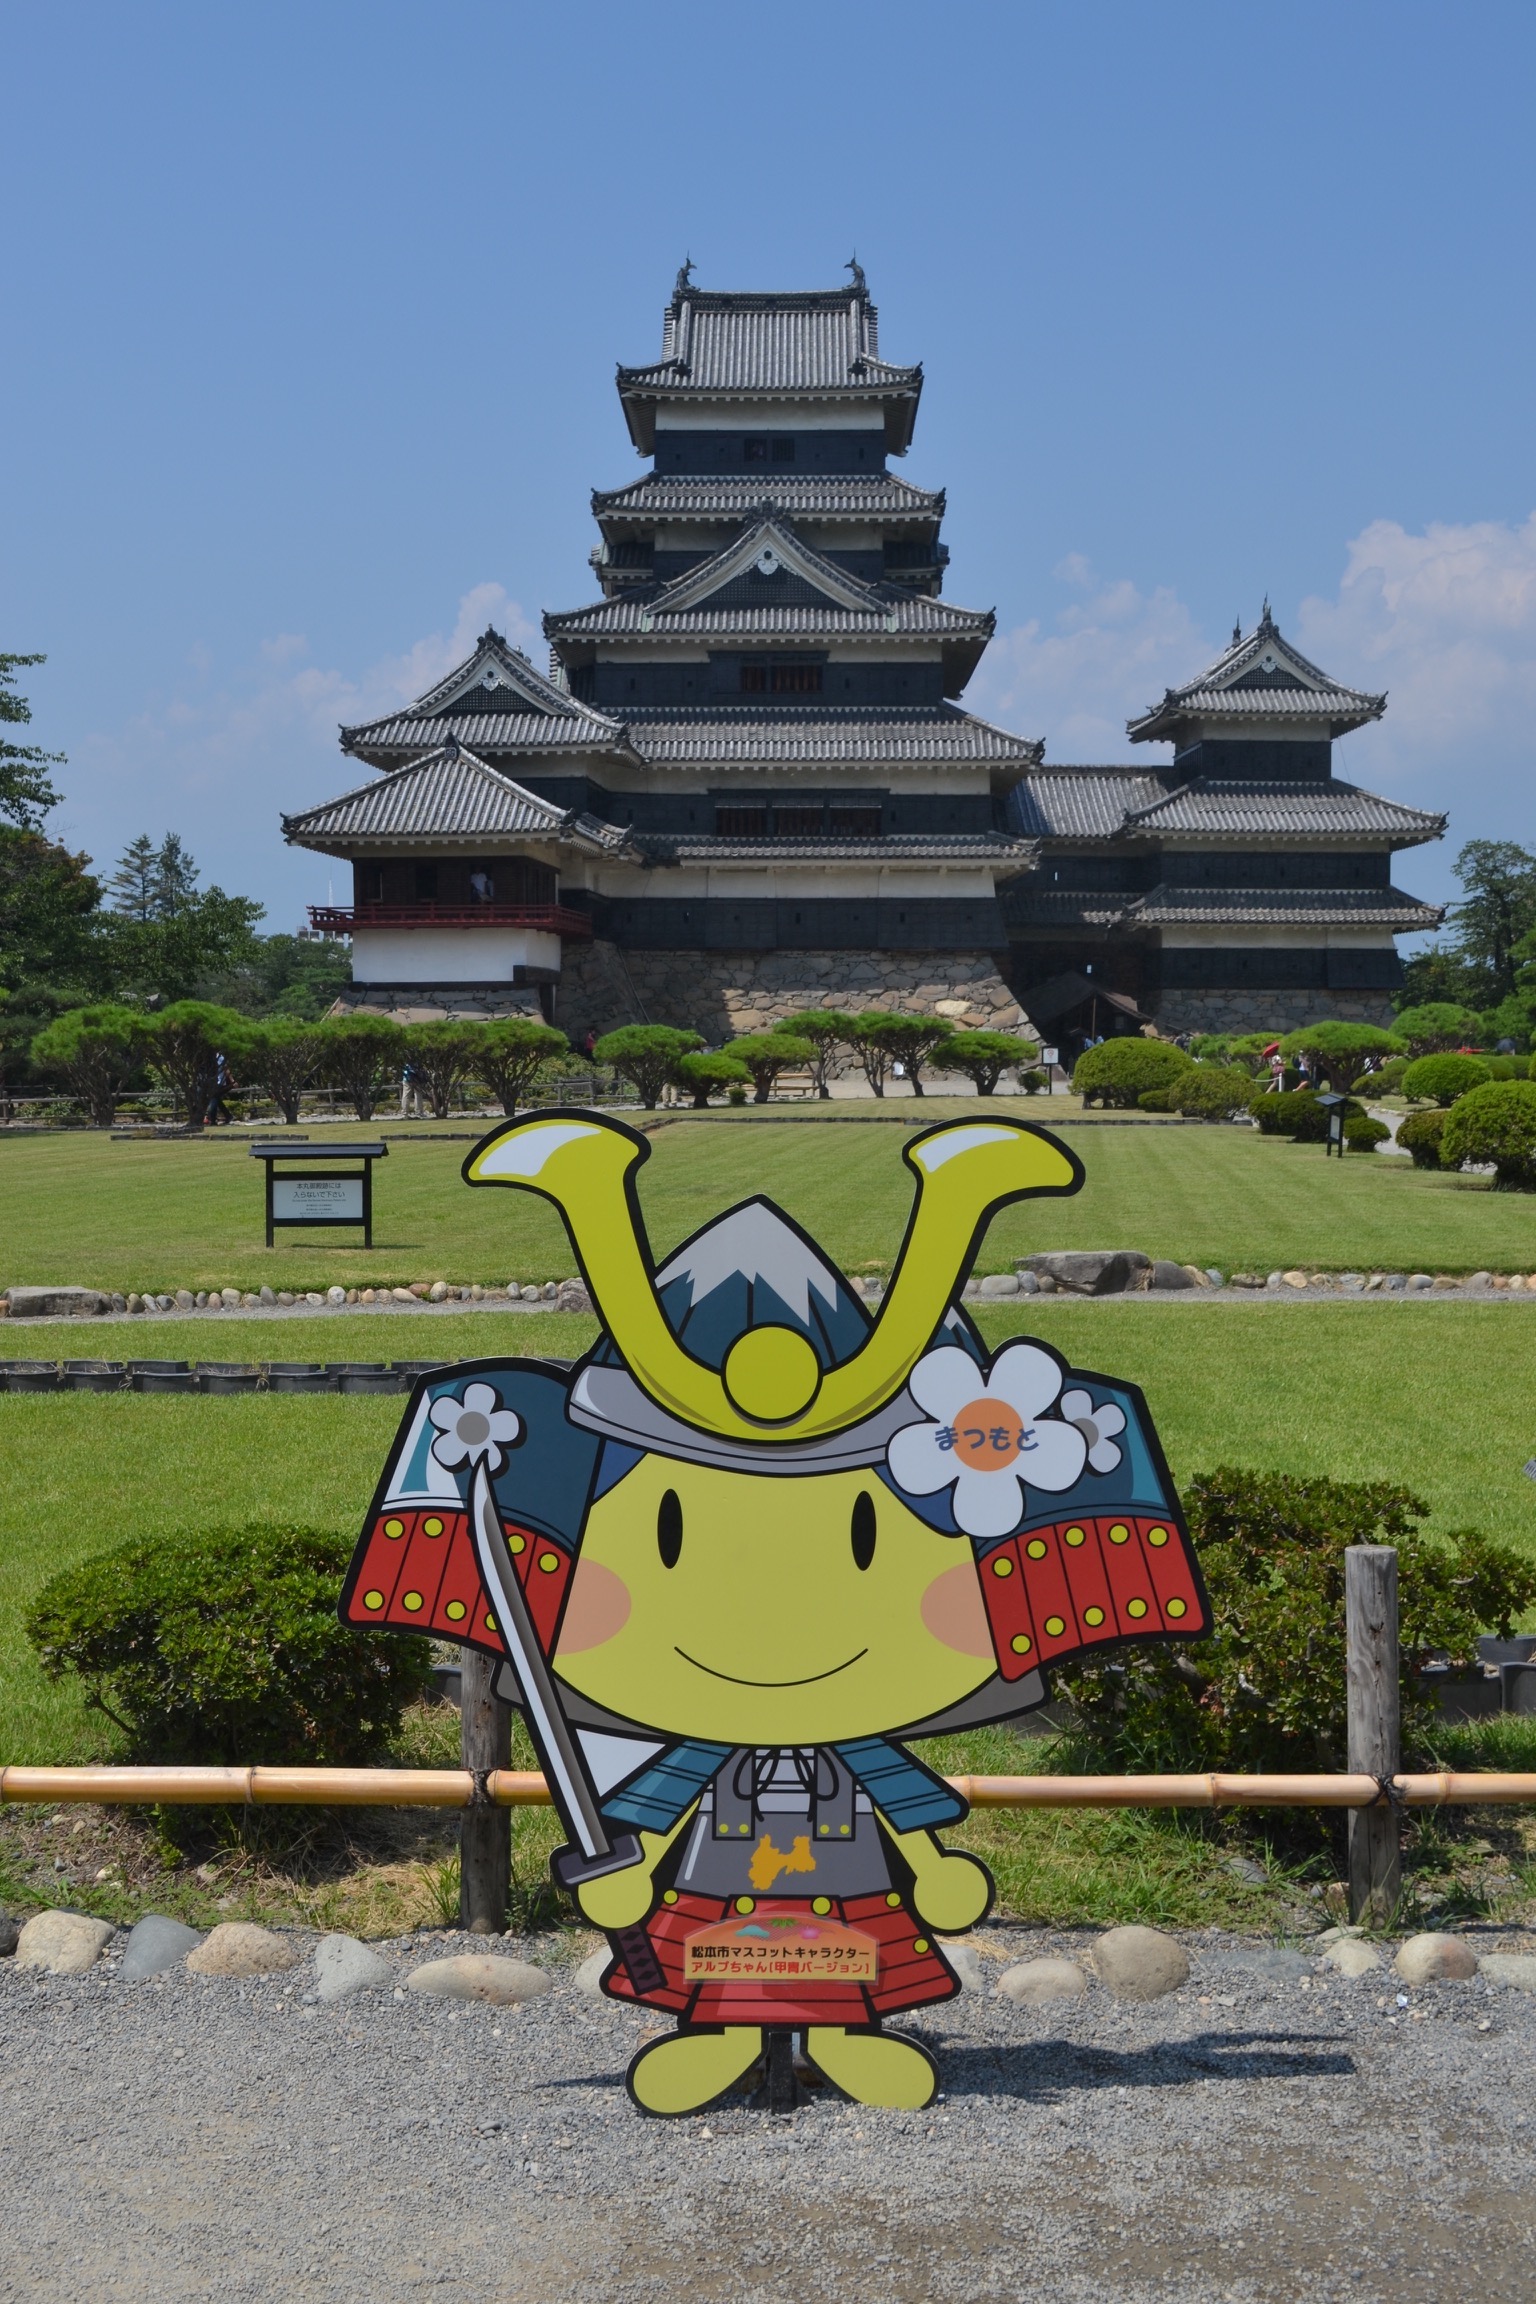 A cartoon samurai stands on the castle grounds.